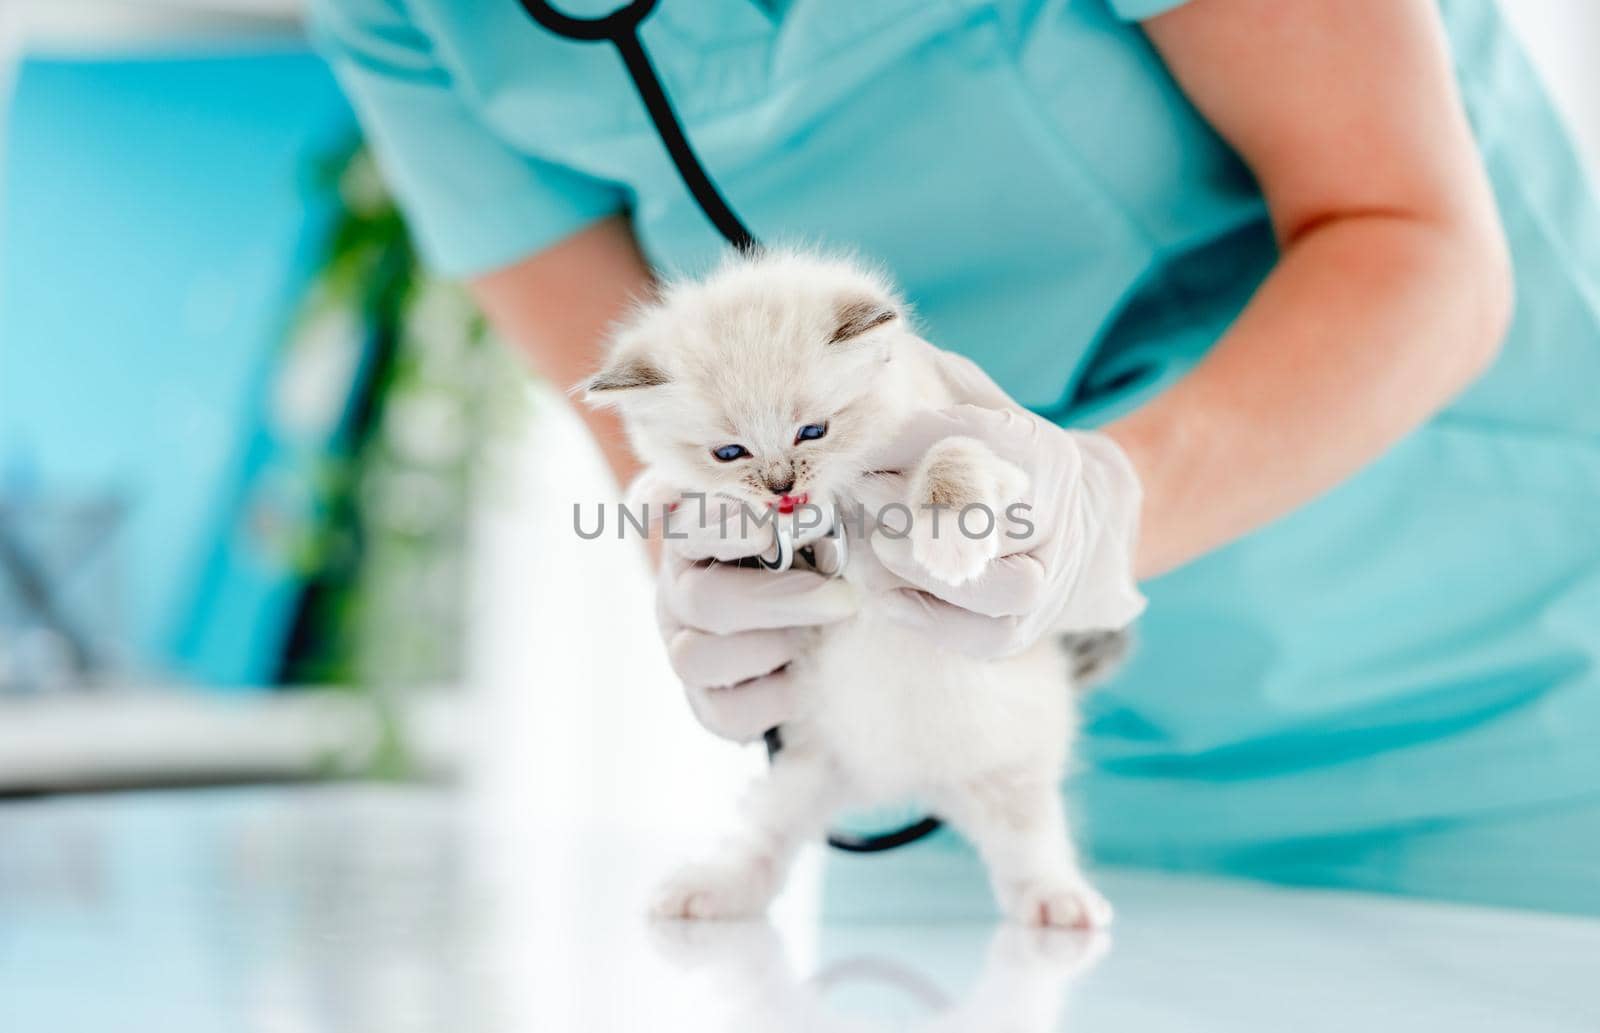 Woman veterinarian holding cute ragdoll kitten during medical care examining at vet clinic. Adorable fluffy purebred kitten in animal hospital